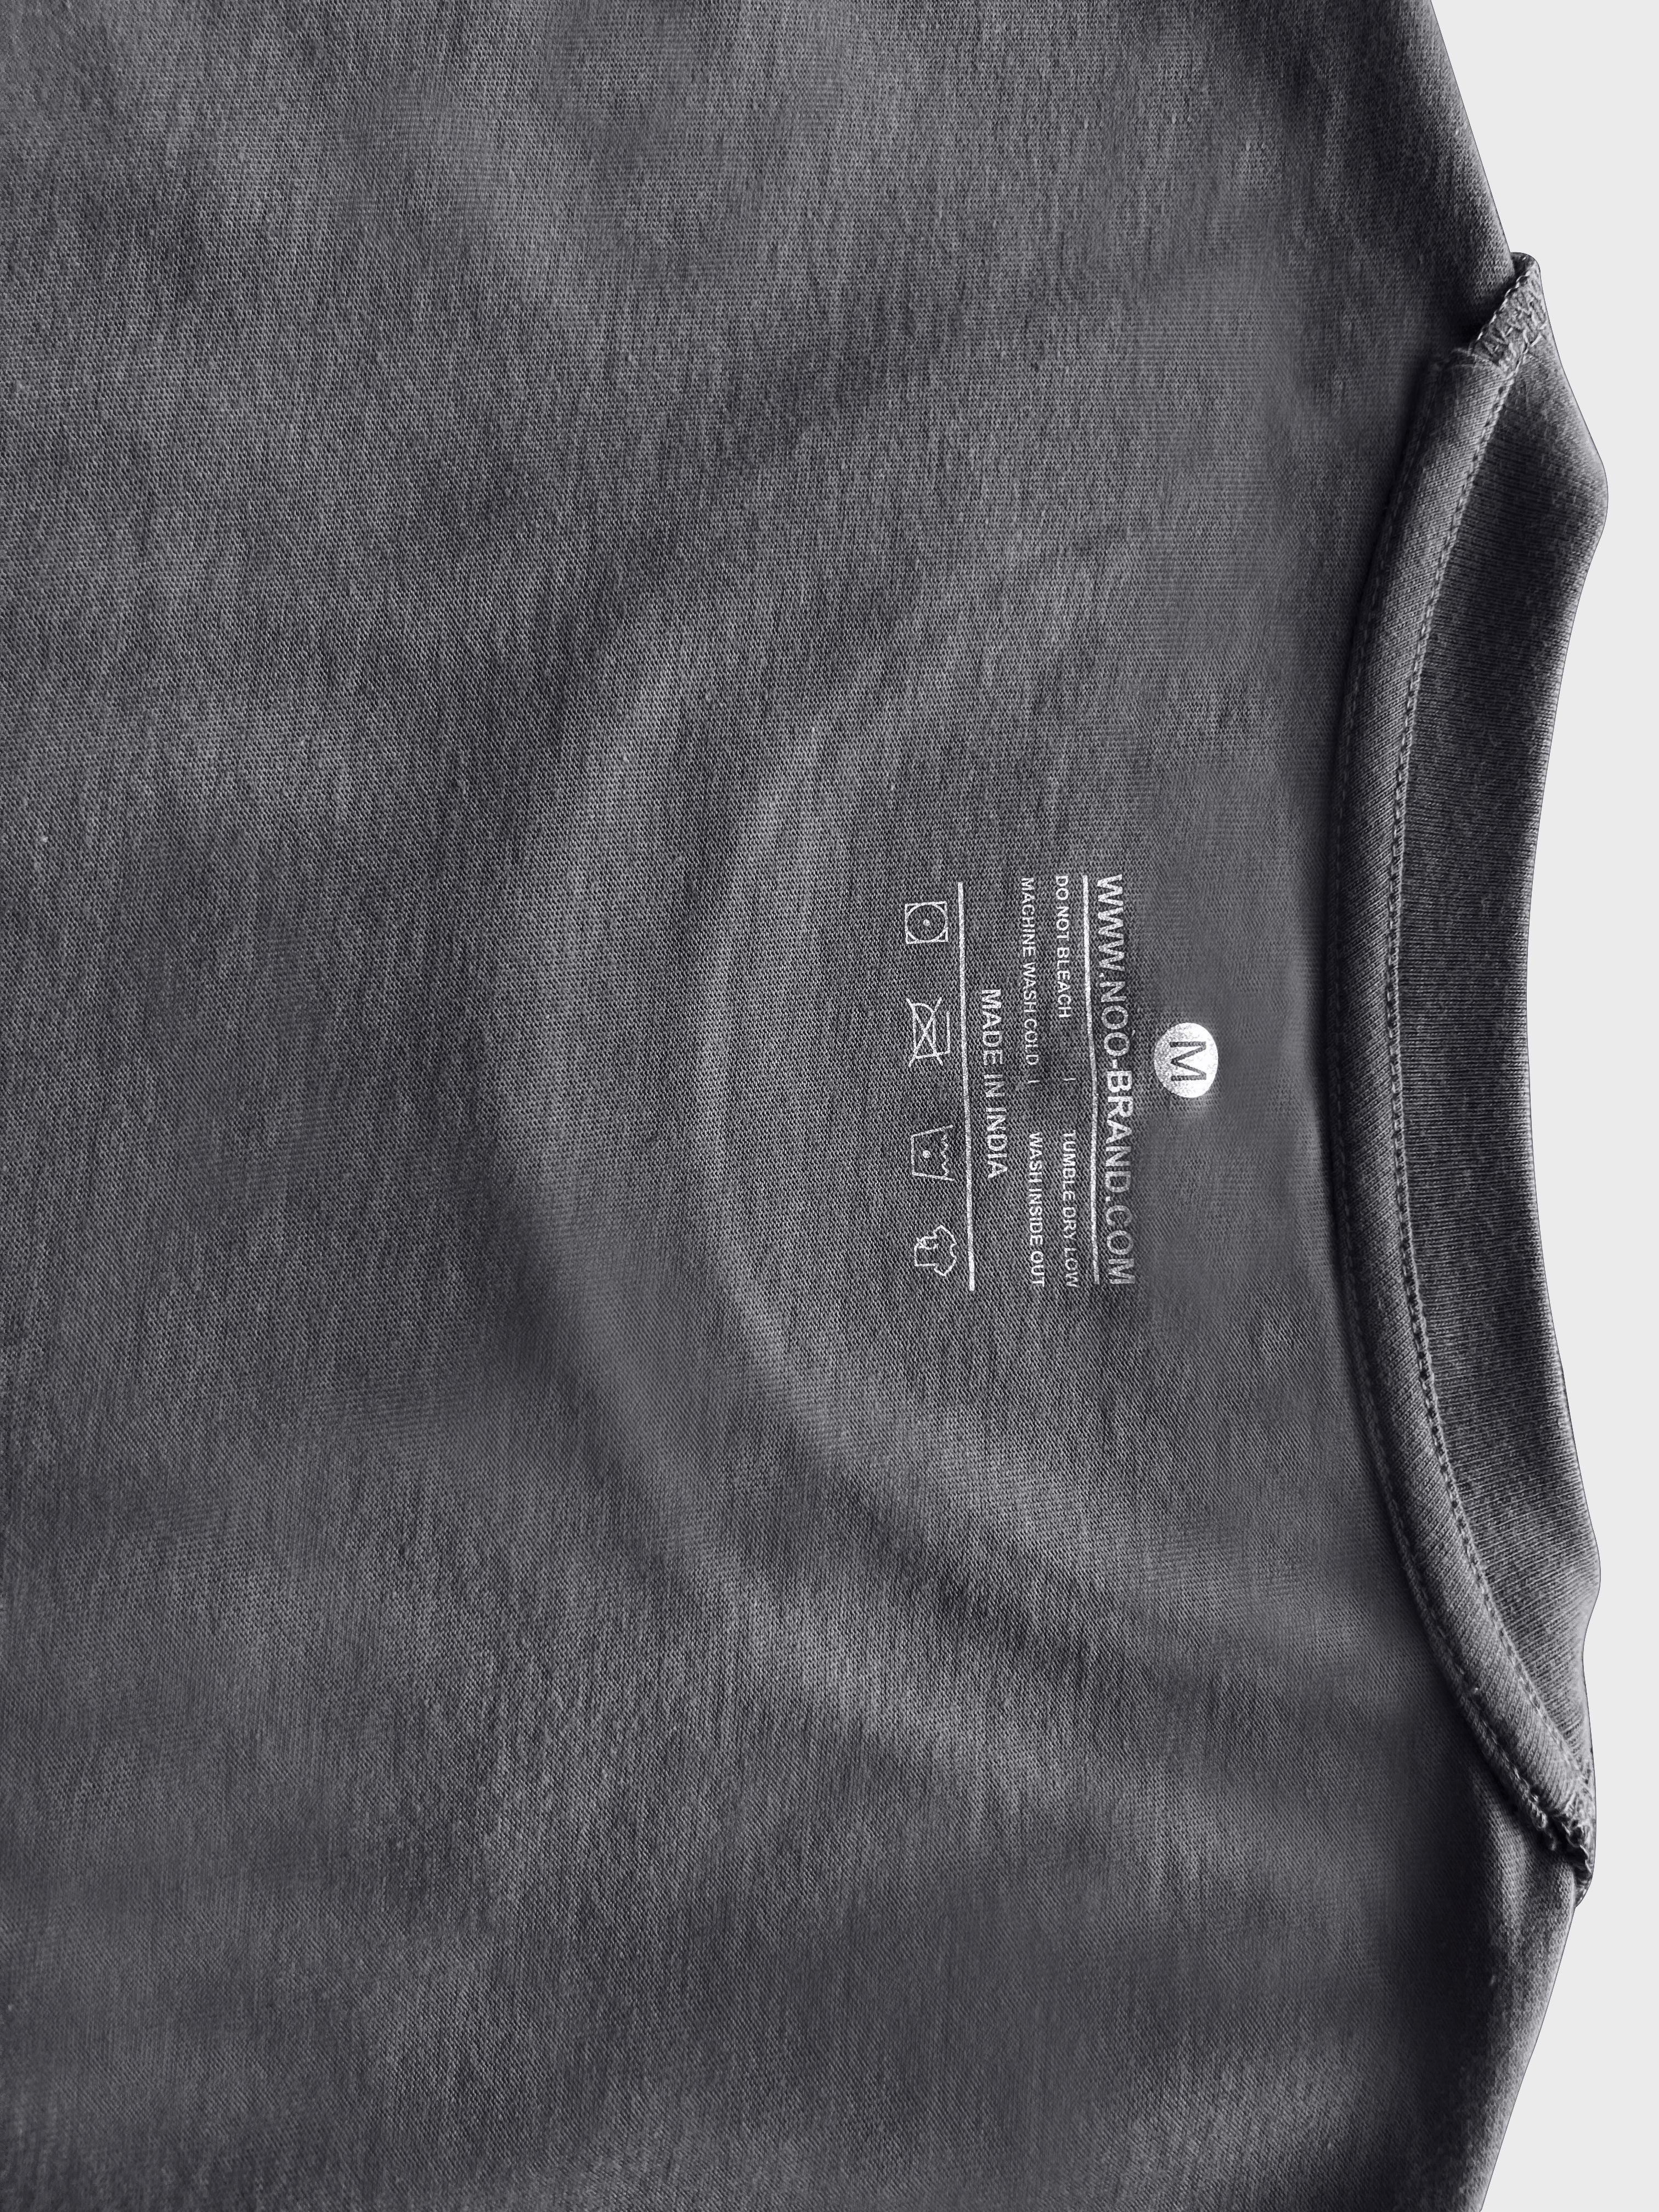 Crew Neck Dark Grey blank T-shirt with NOO-BRAND Label